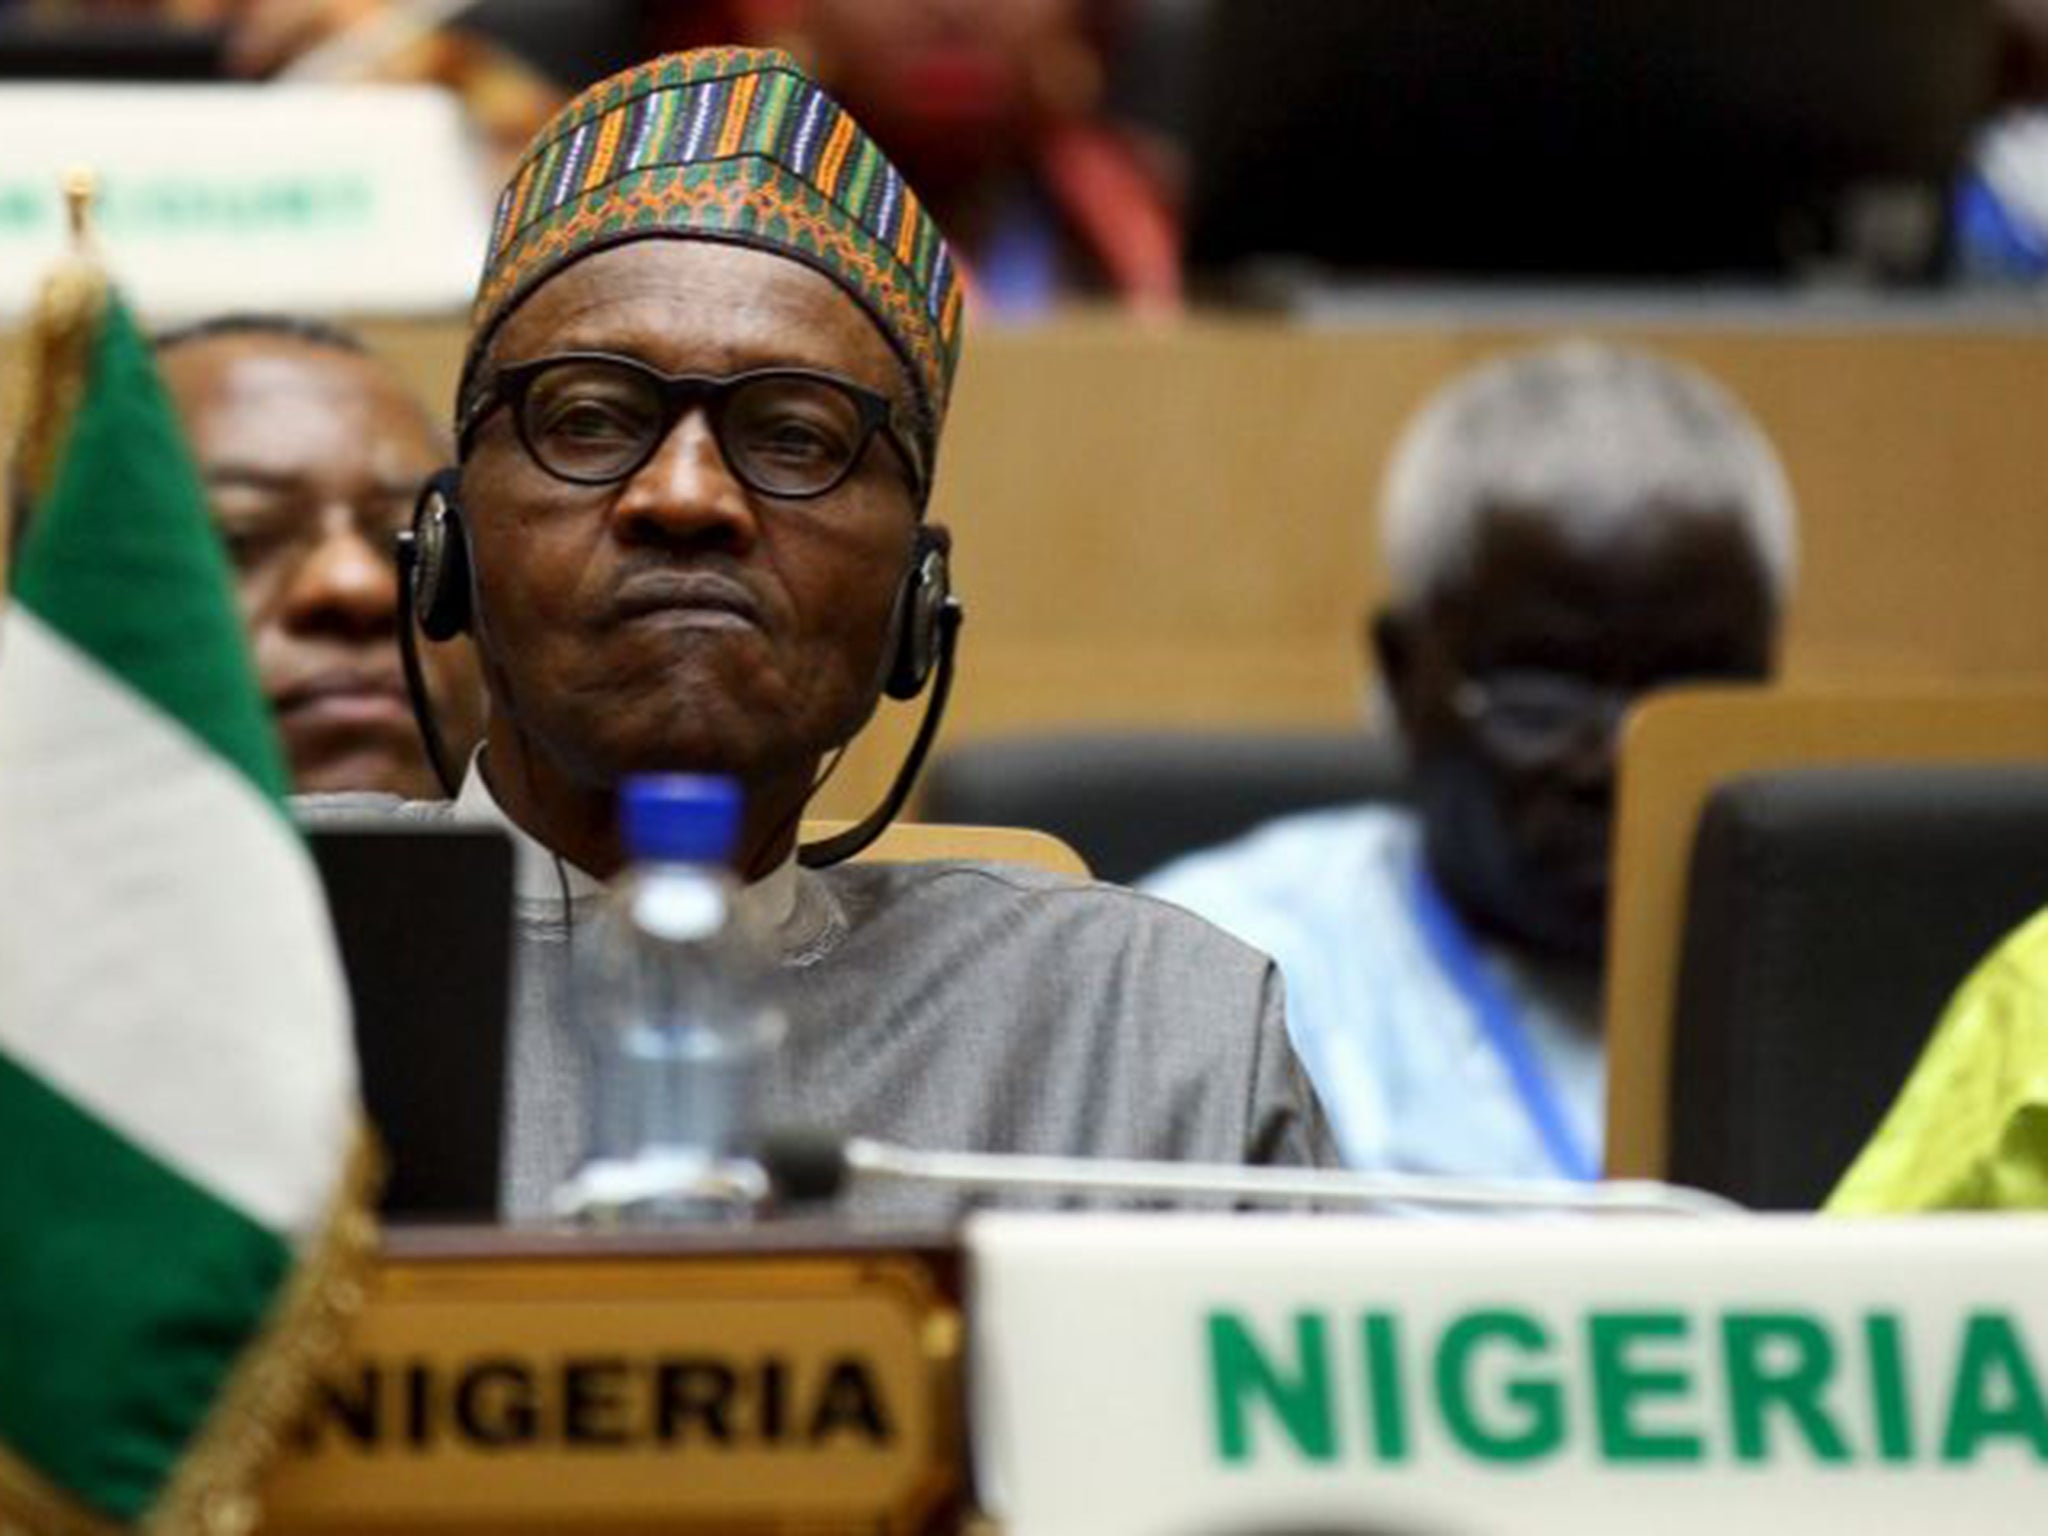 Nigeria - led by President Muhammadu Buhari - have lost hundreds of Christians in Nigeria thanks to terrorist group Boko Haram